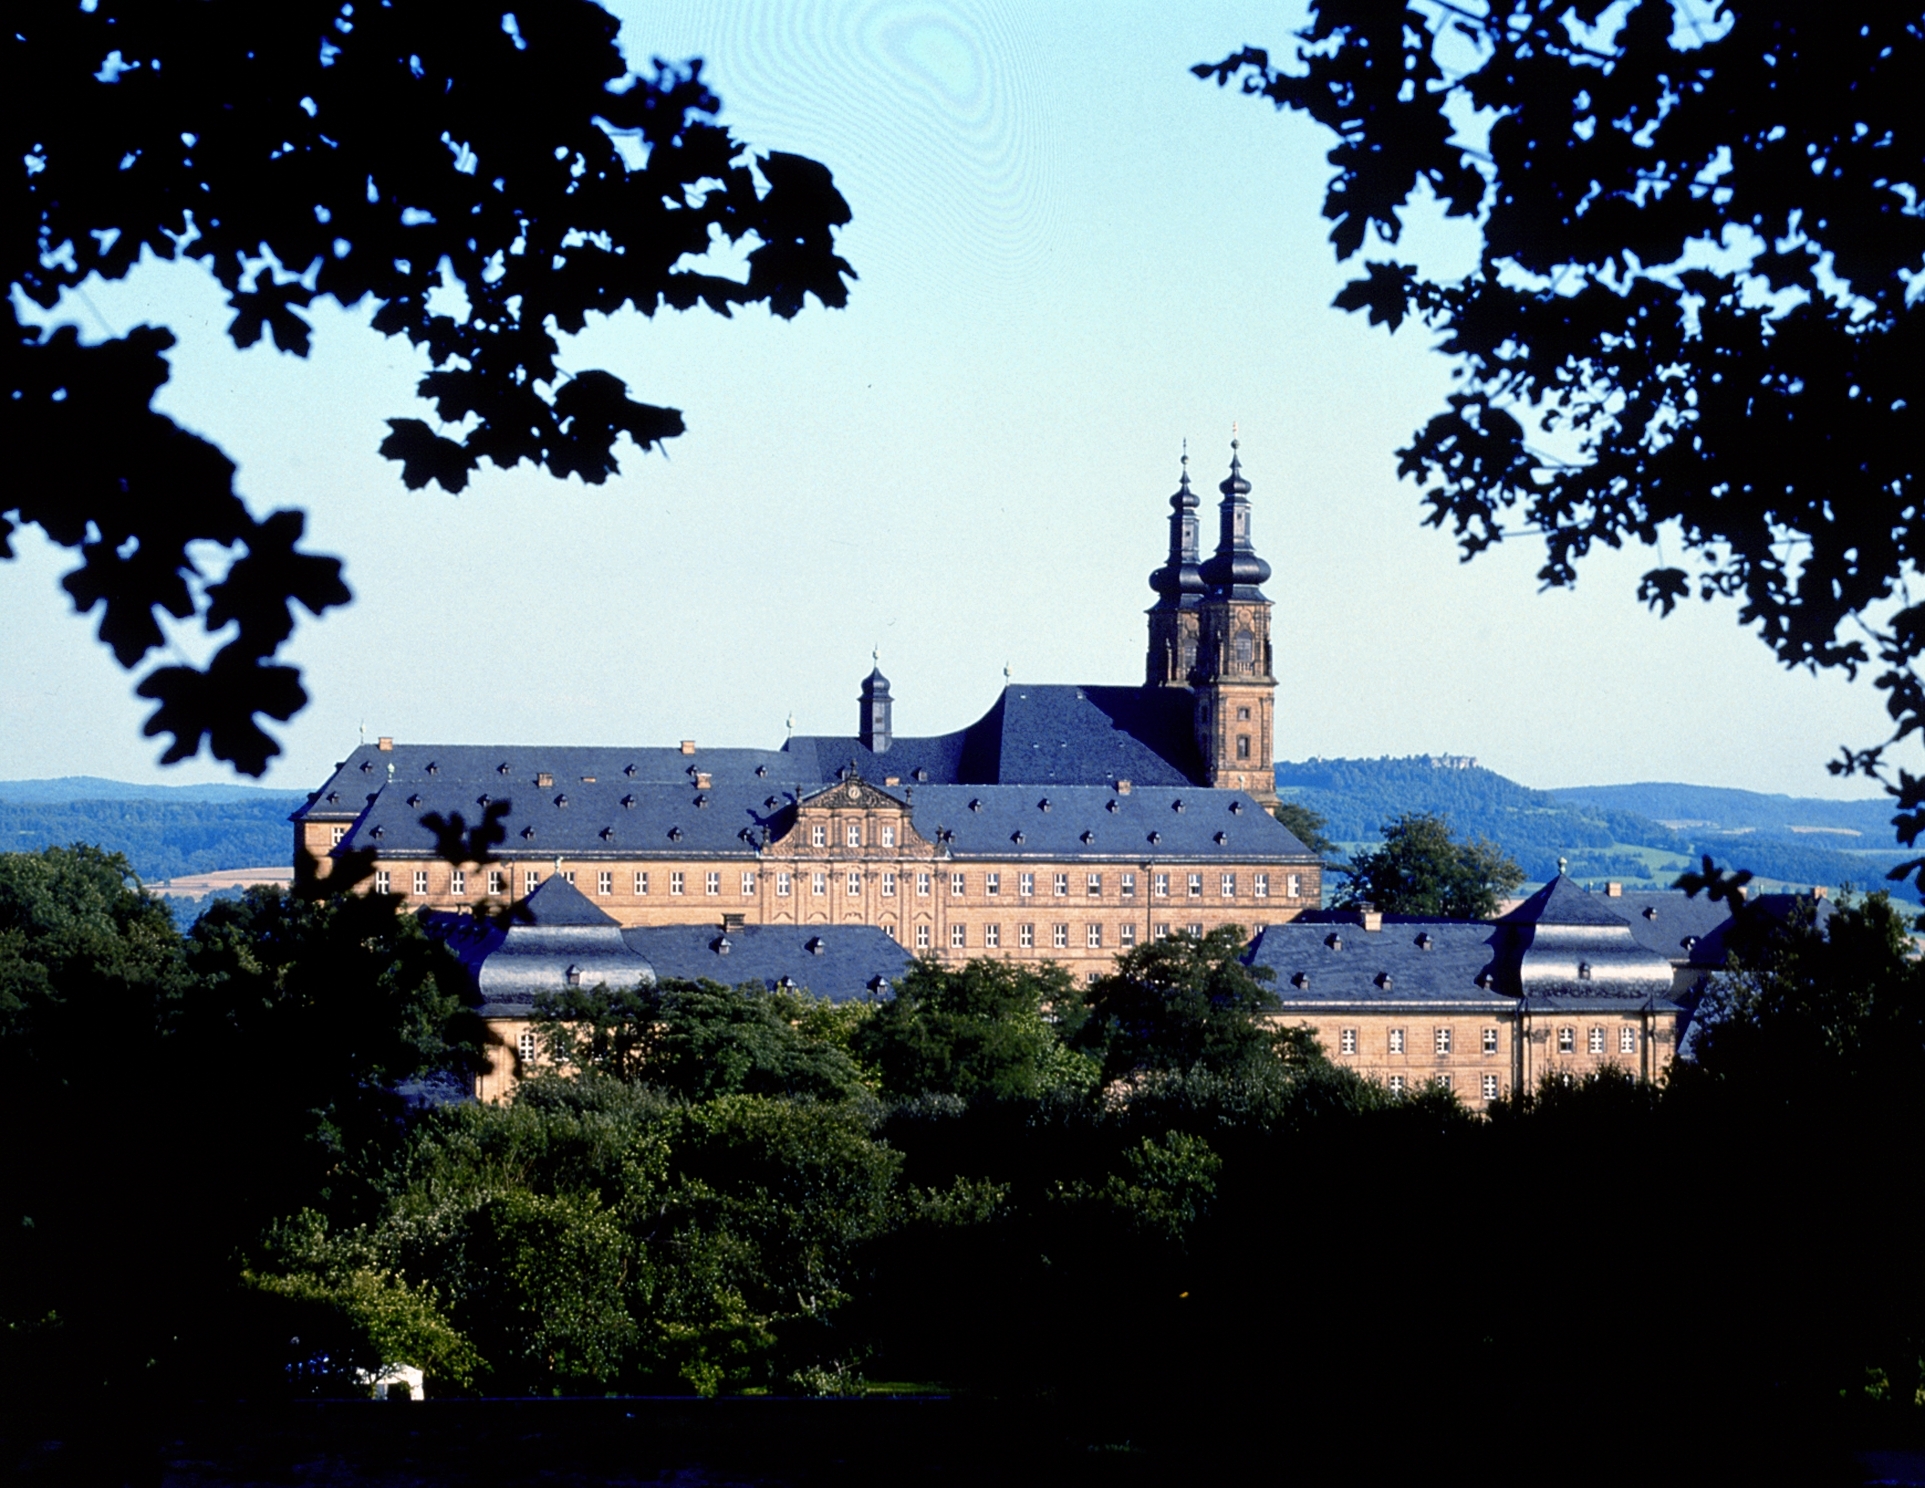 Kloster Banz.
